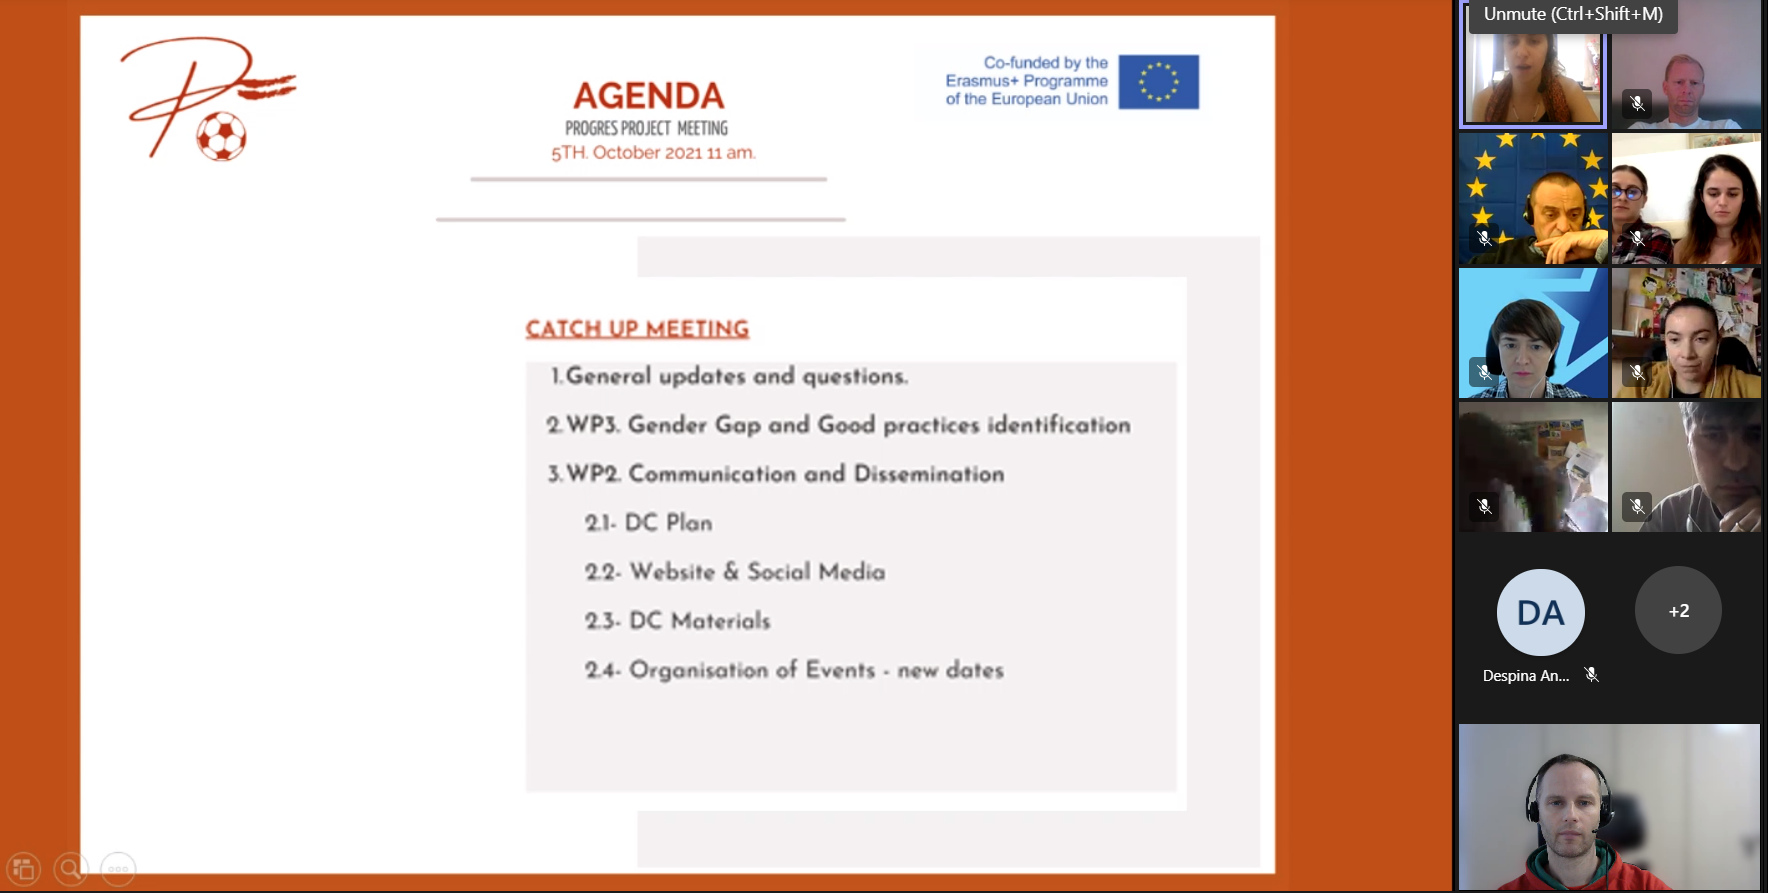 Agenda of the online meeting